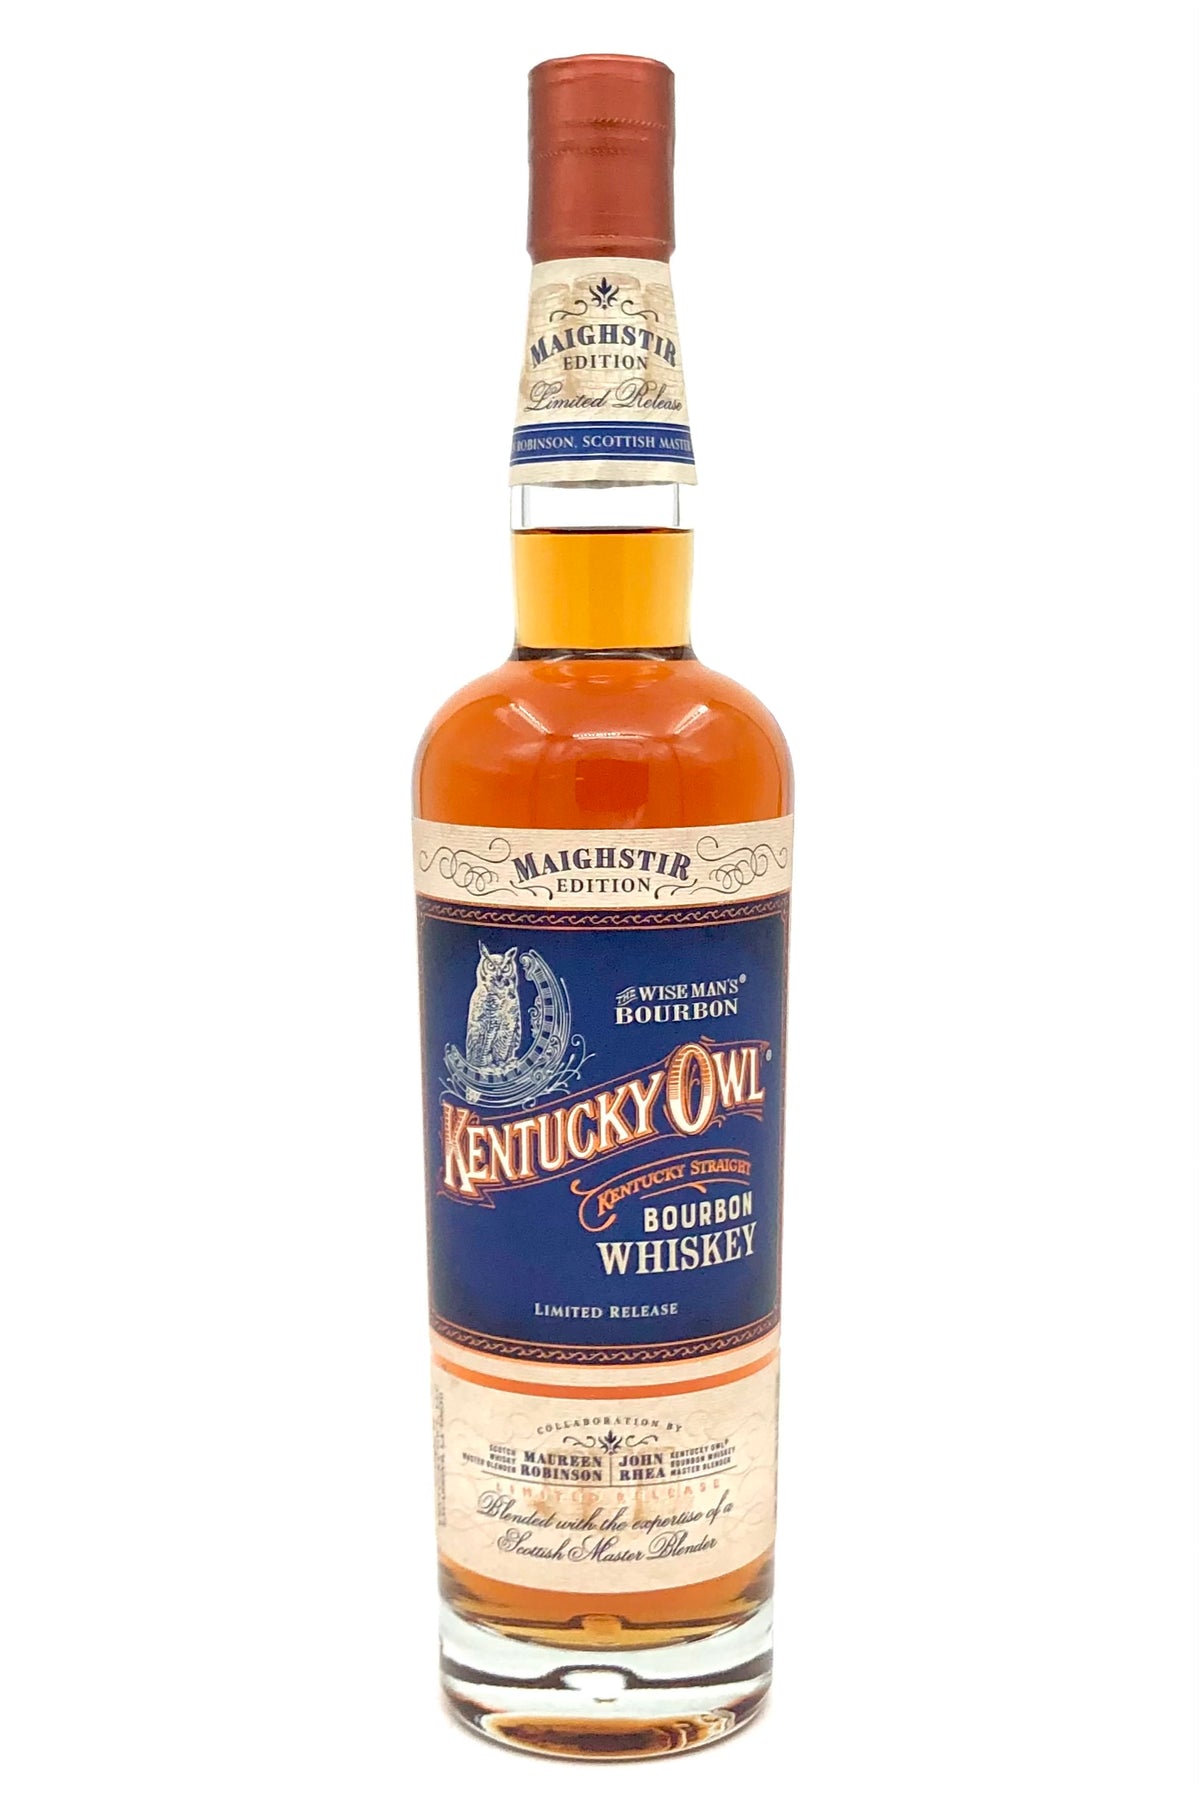 Kentucky Owl Maighstir Edition Bourbon Whiskey Limited Release